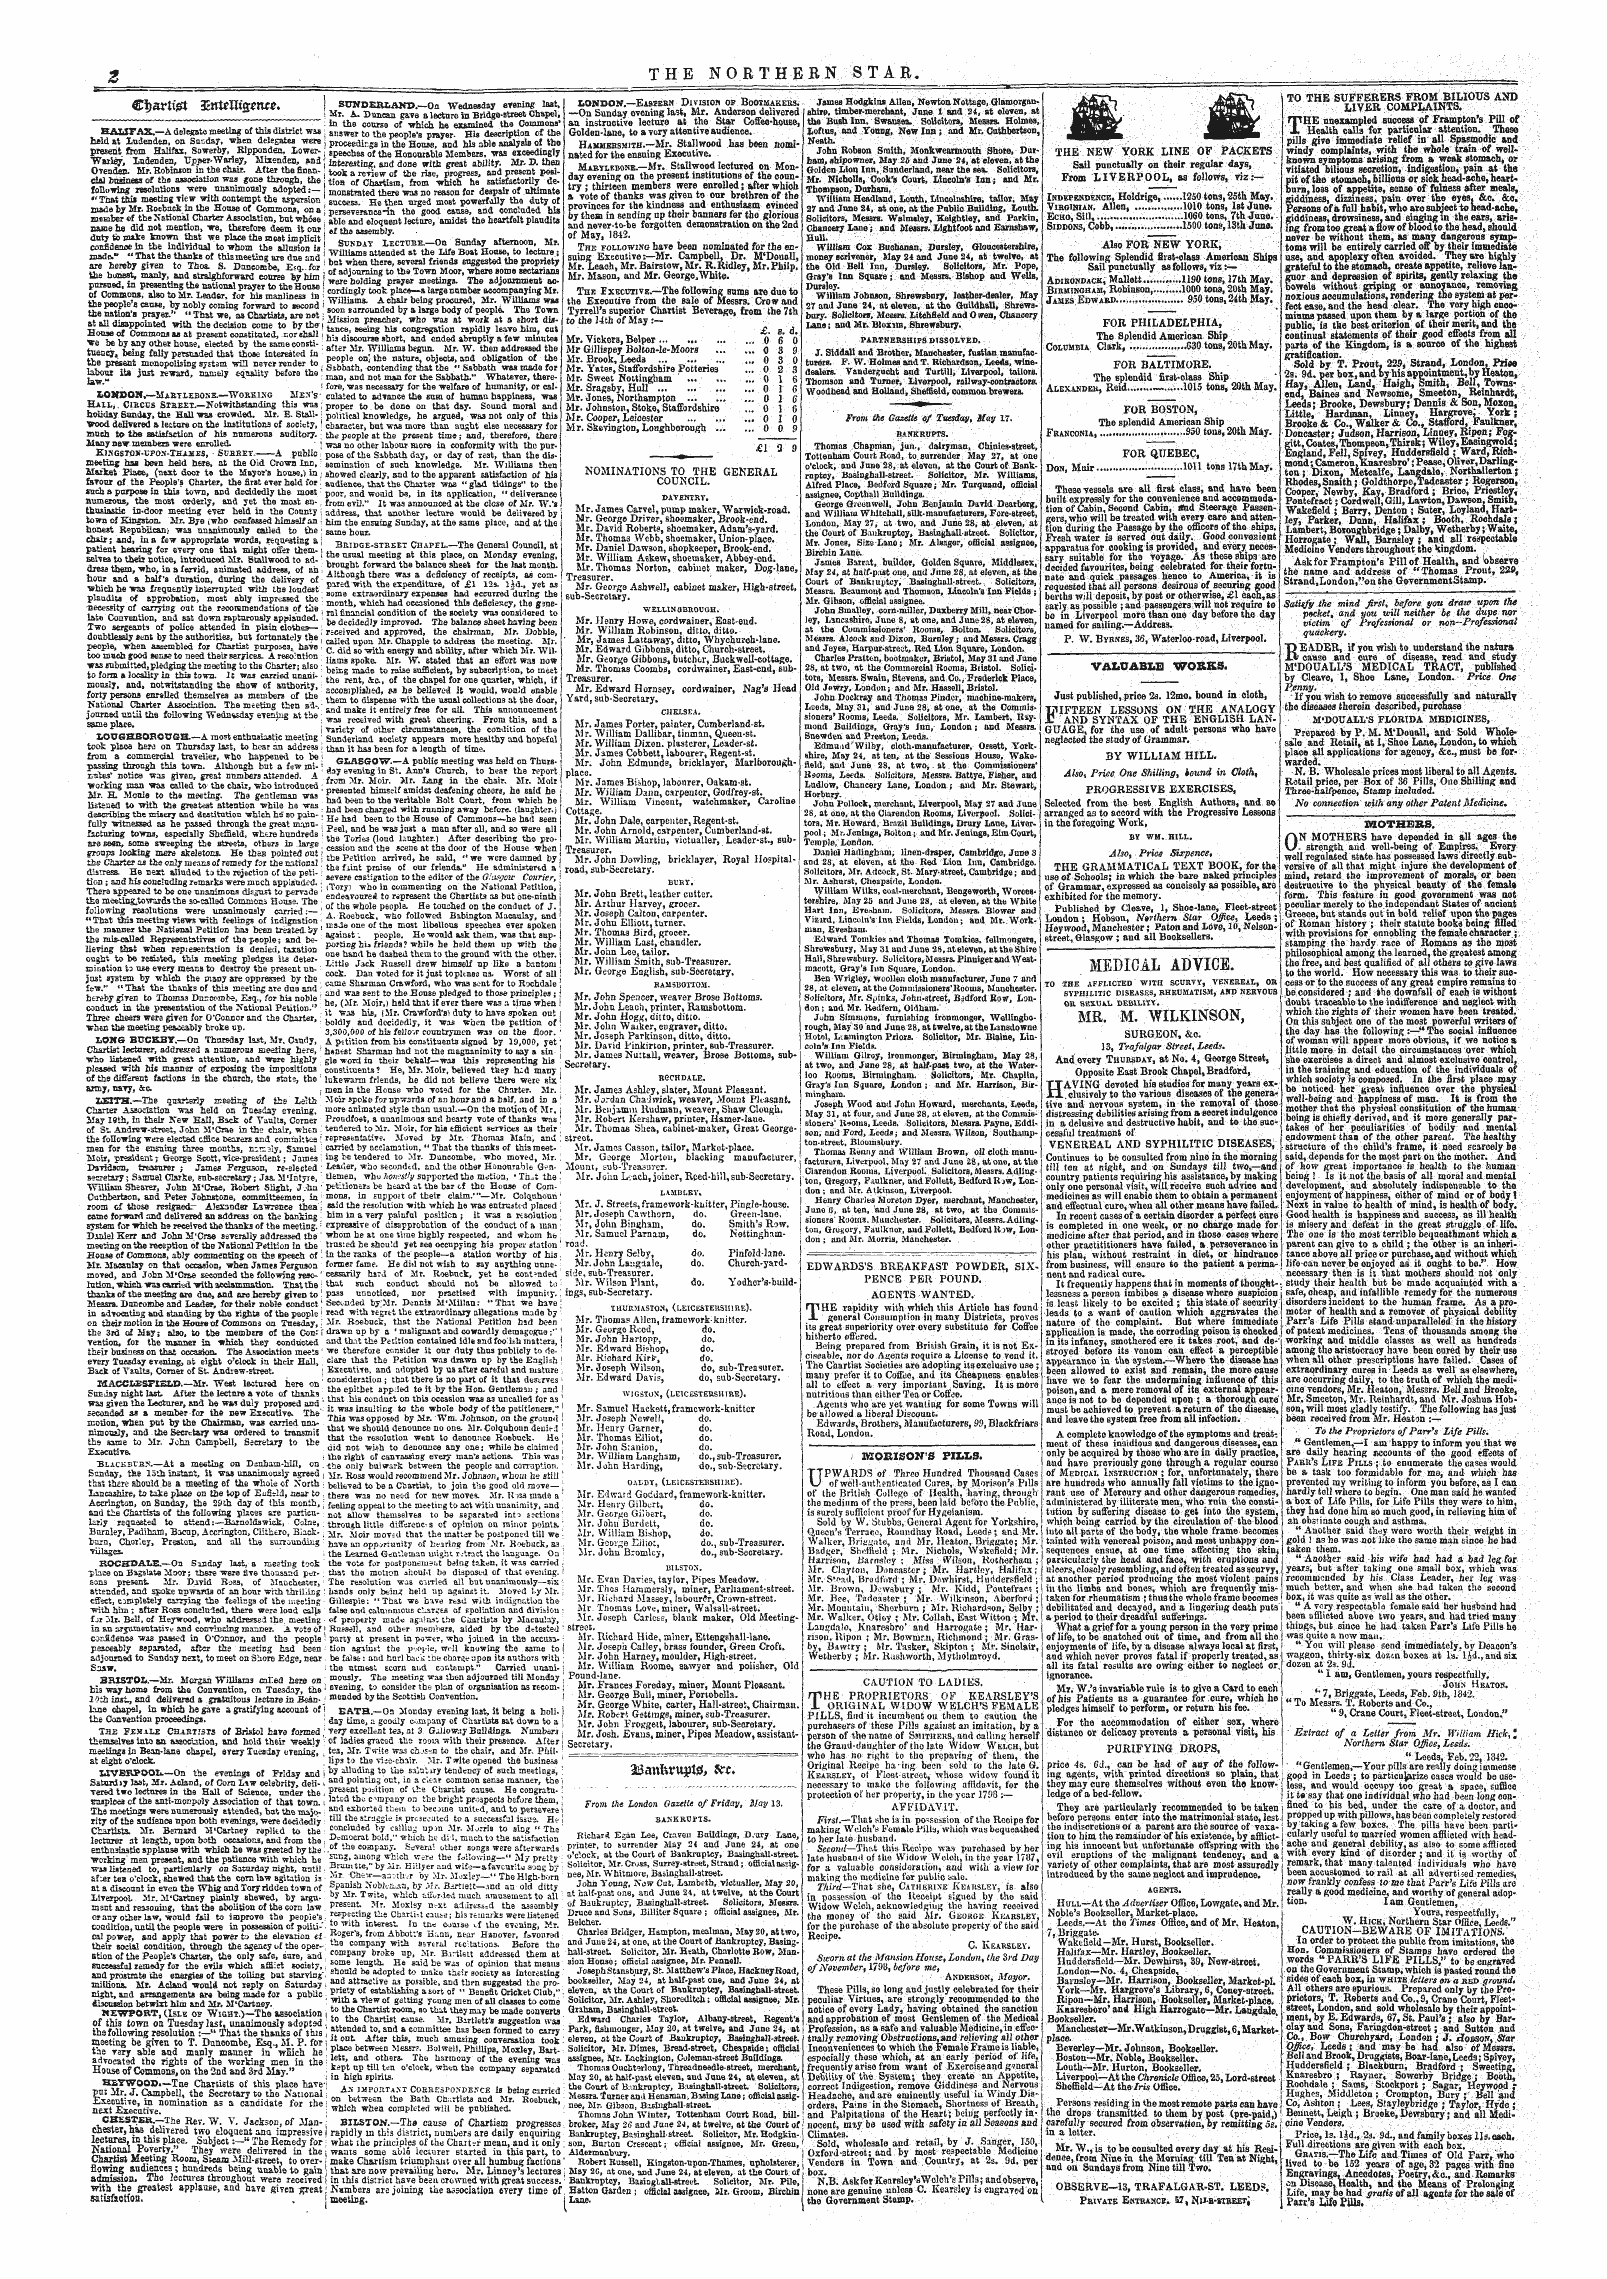 Northern Star (1837-1852): jS F Y, 5th edition - Untitled Ad